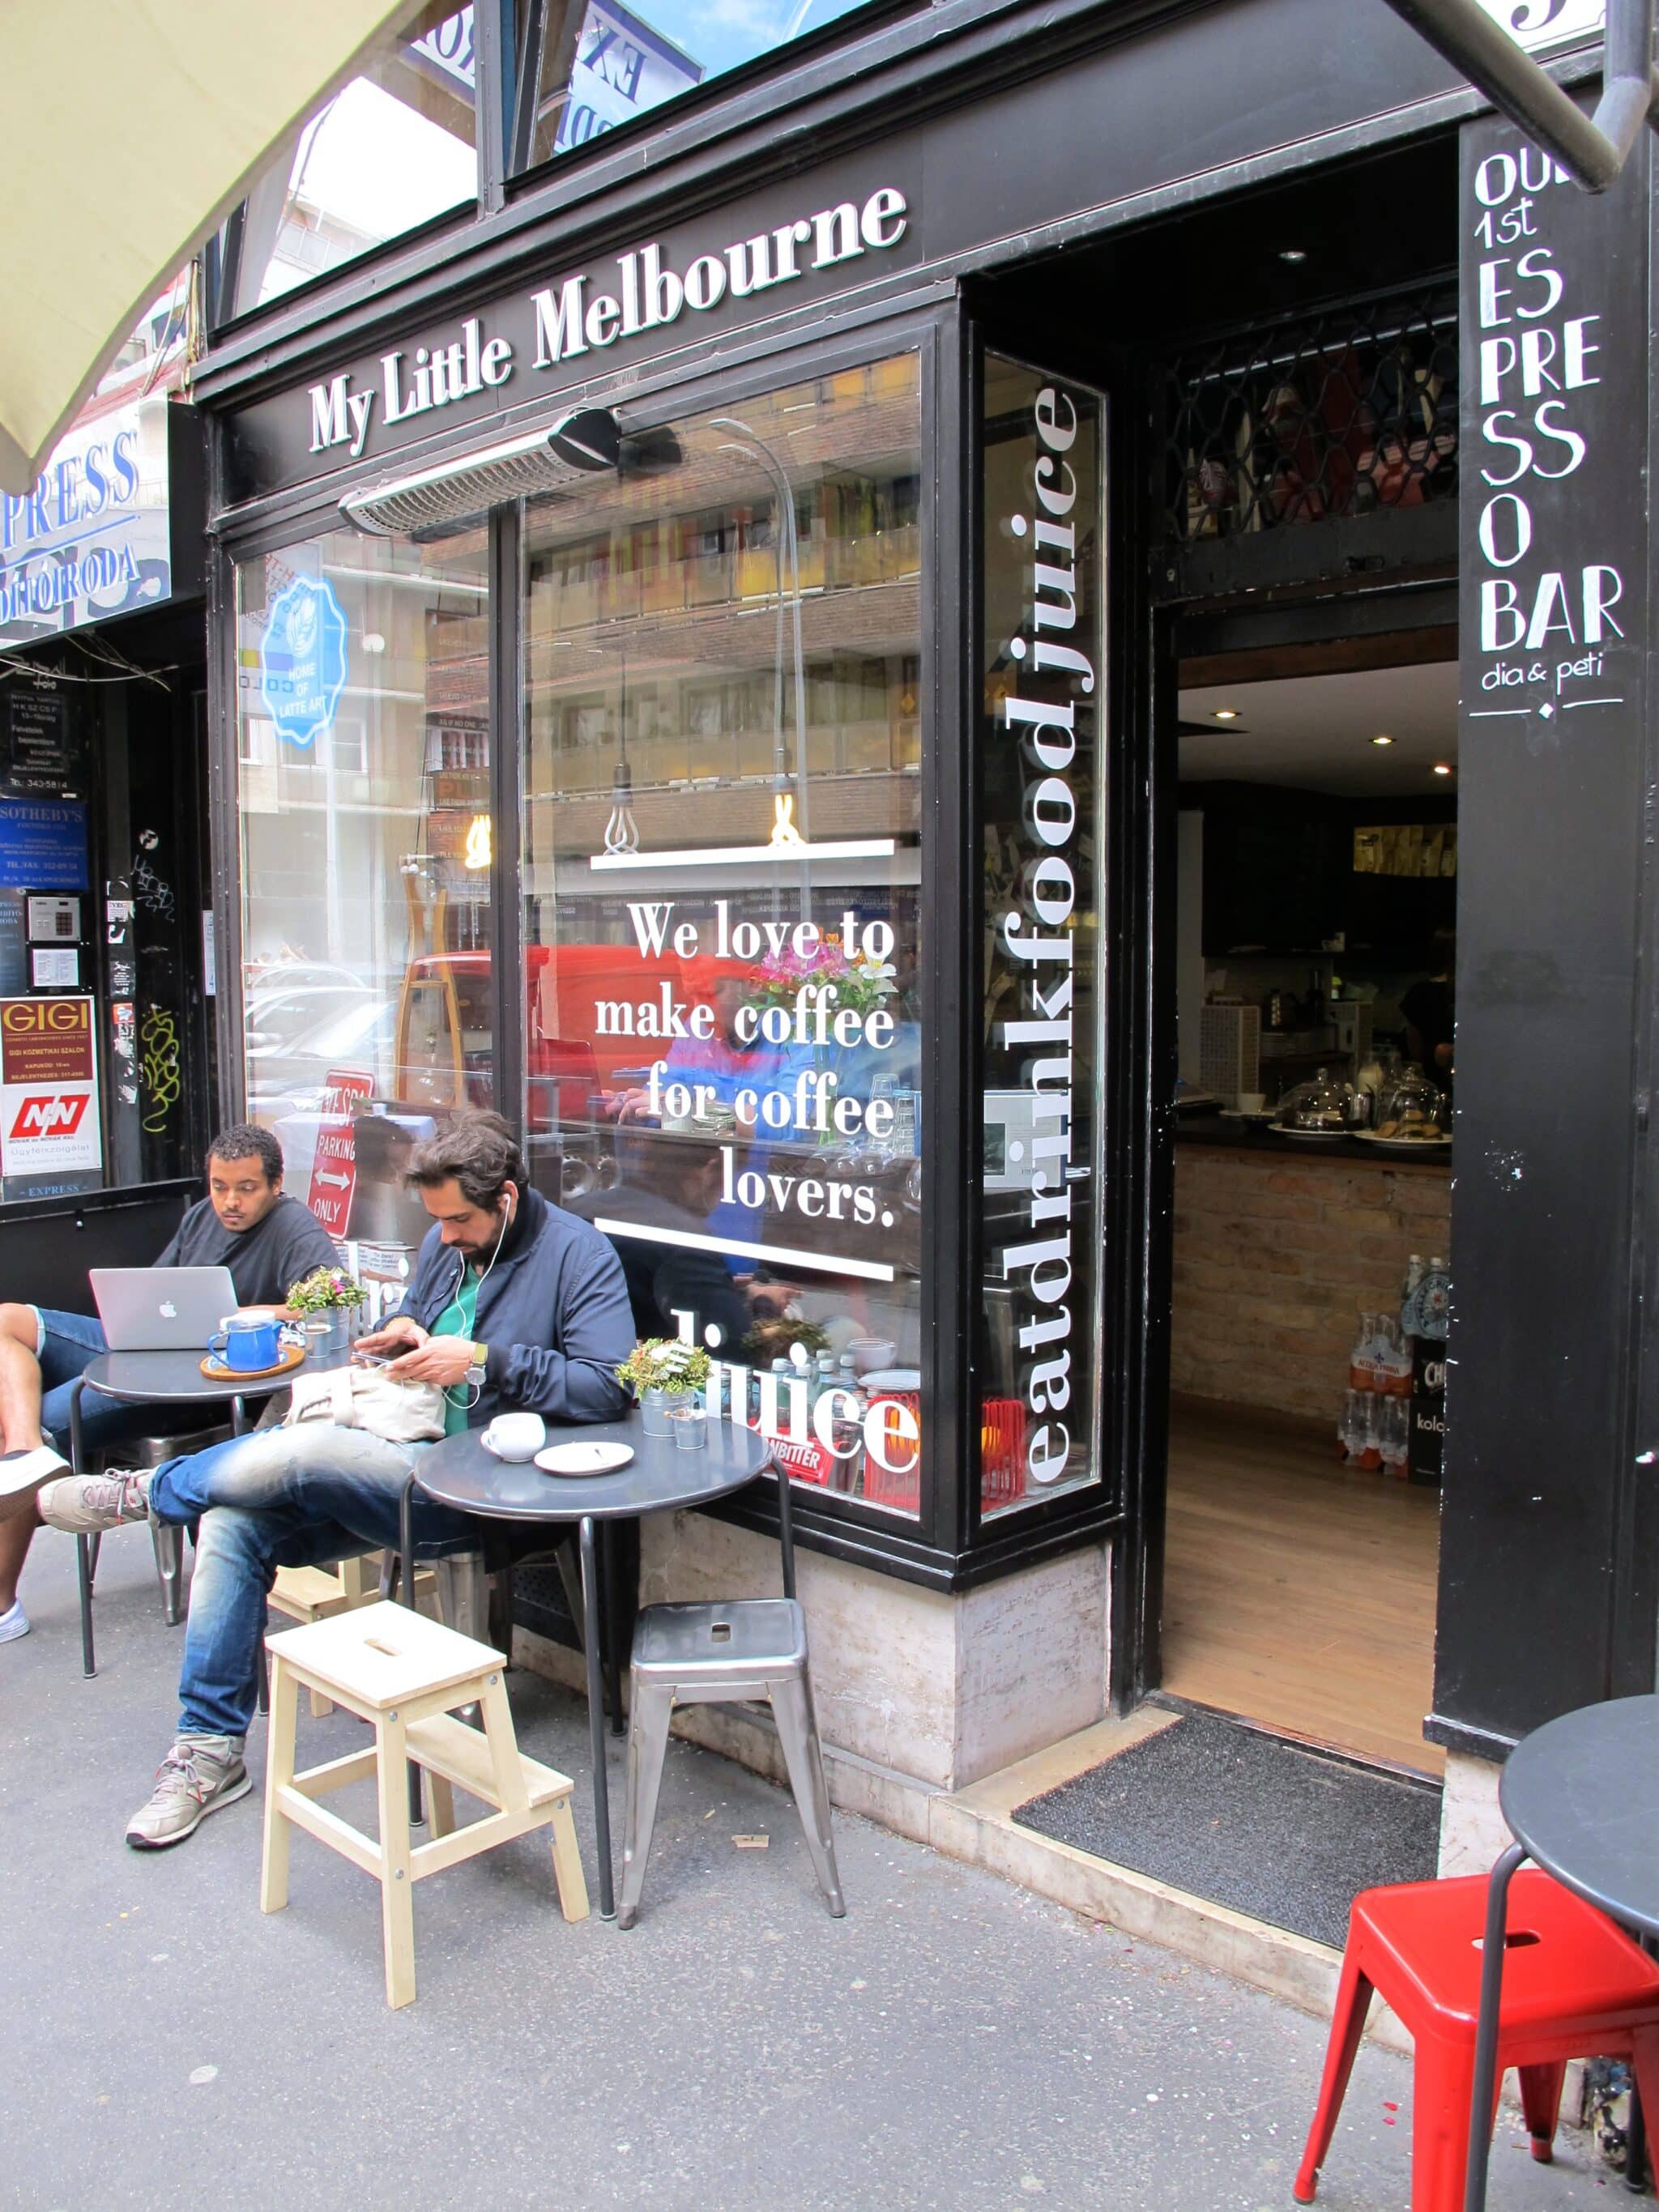 My Little Melbourne - Budapest (HU) - The Coffeevine